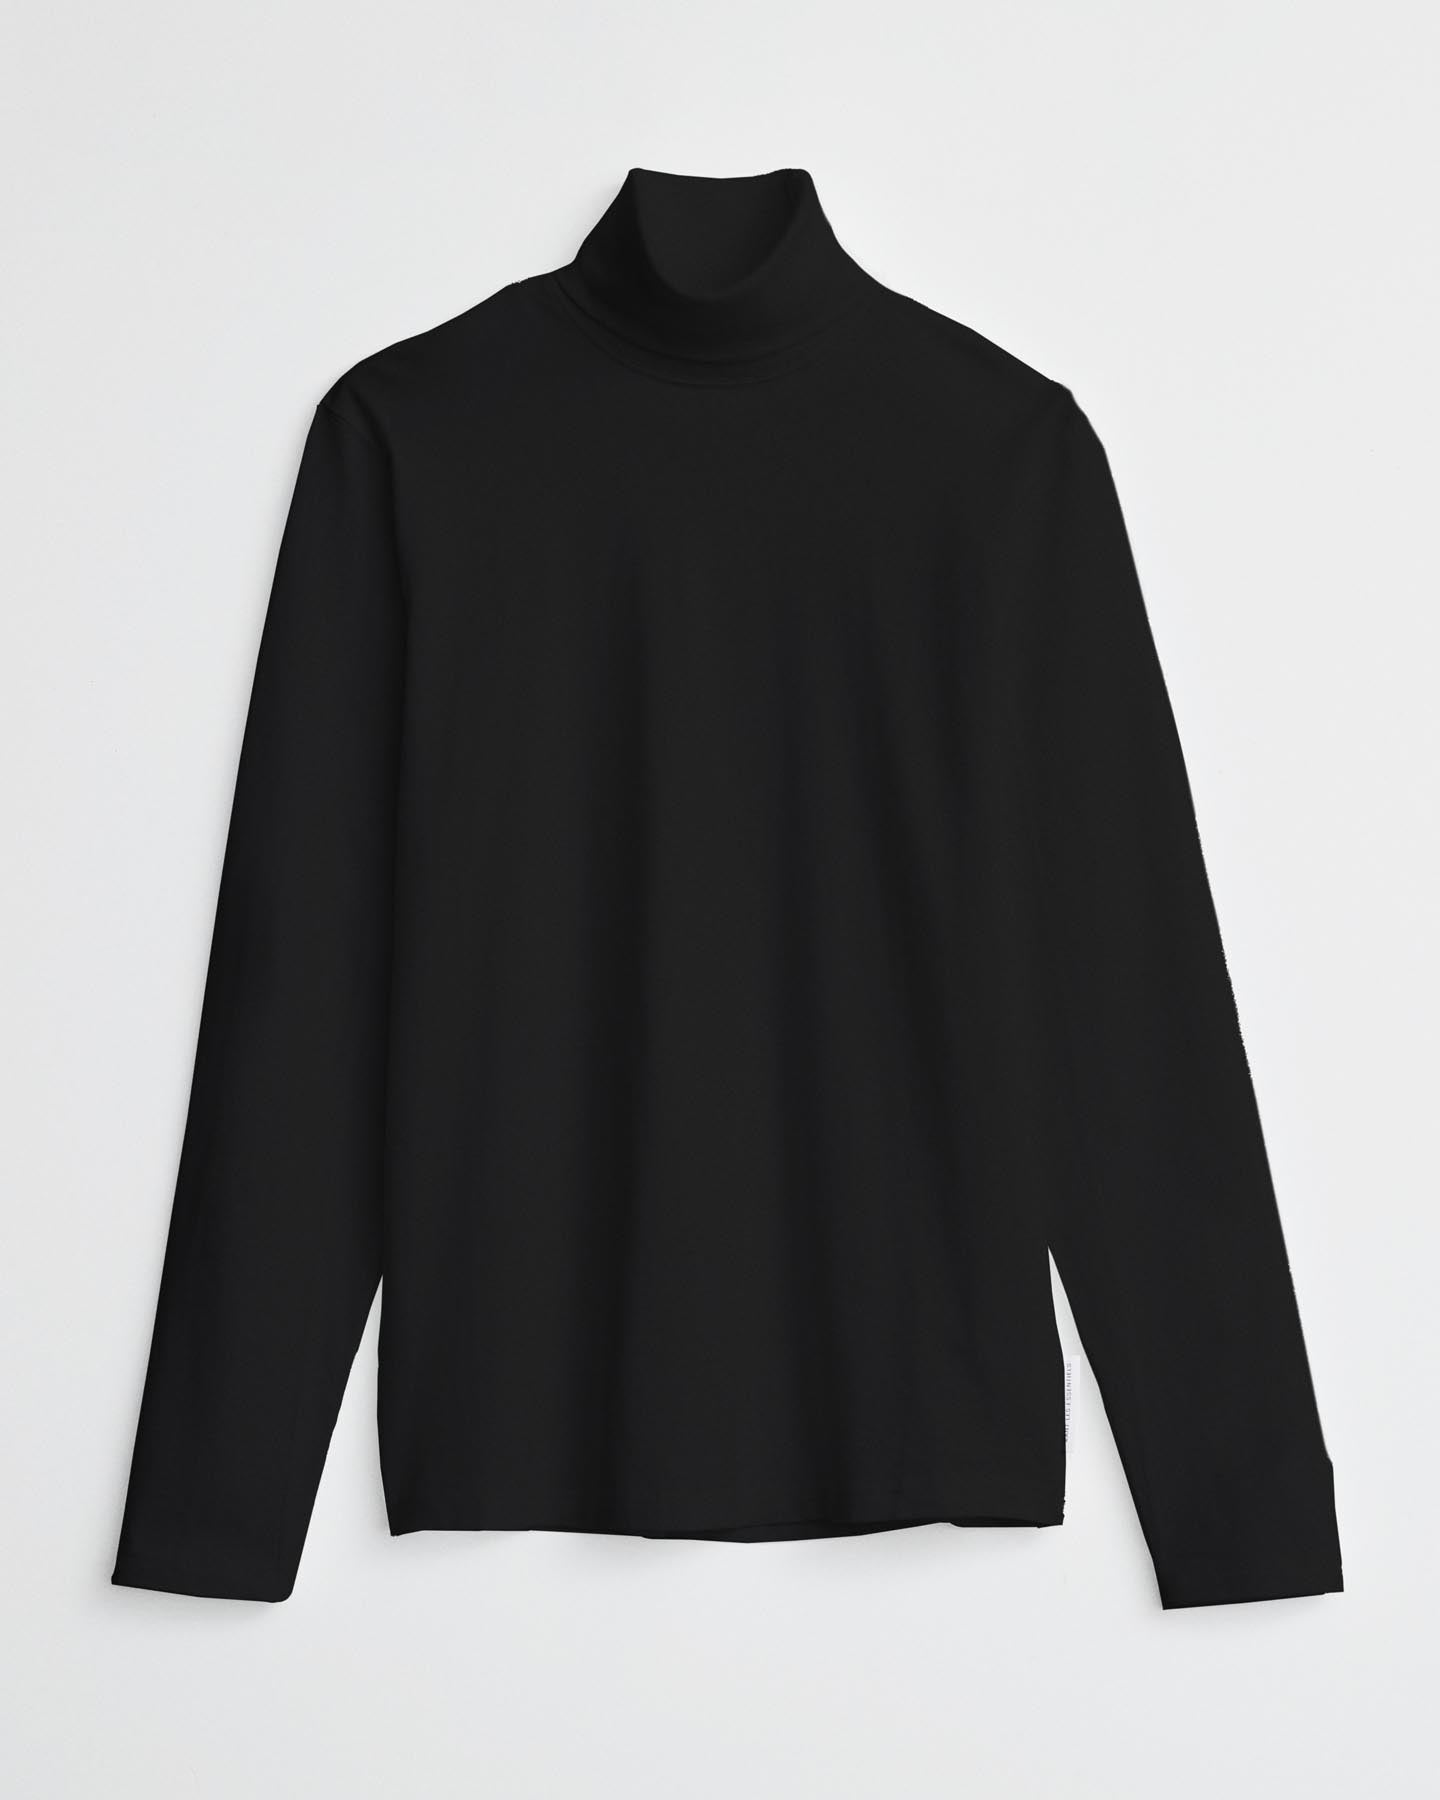 Half-zip minimalist sweater, Le 31